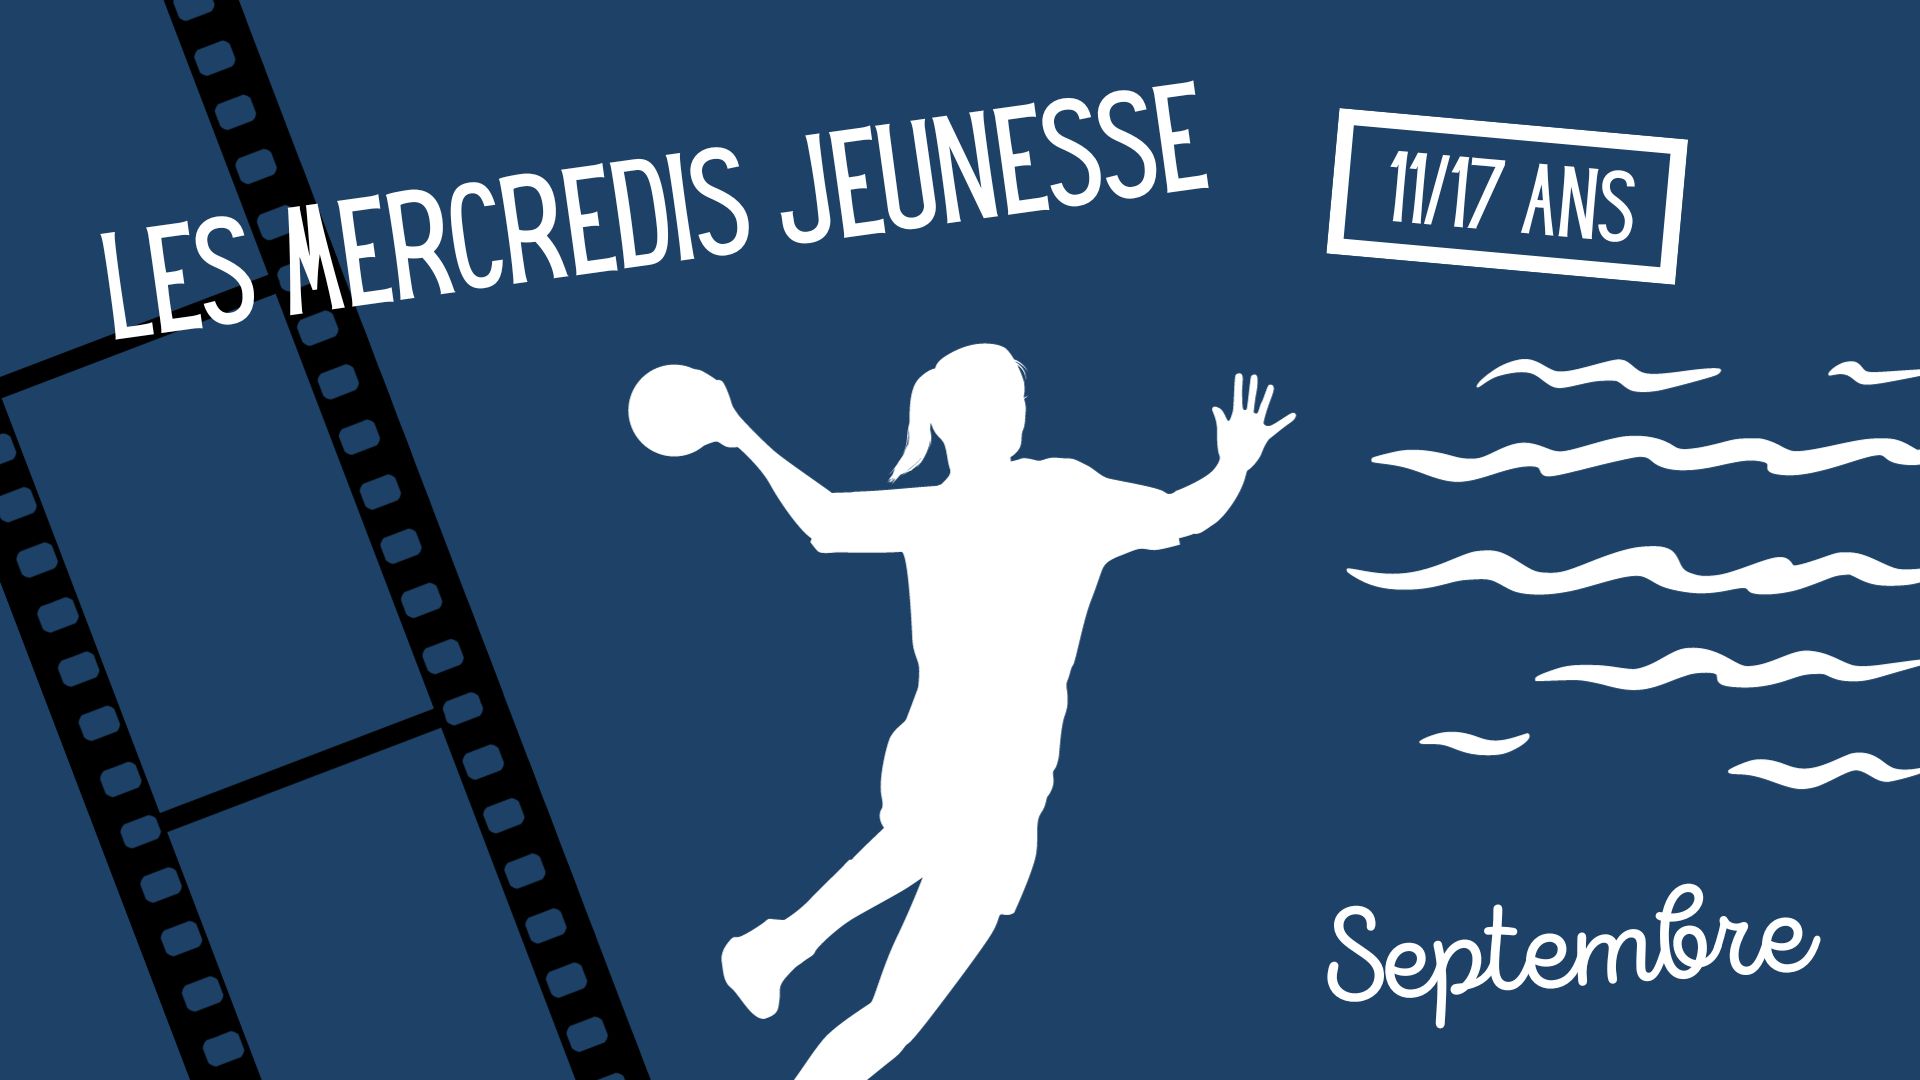 You are currently viewing Planning des mercredis – Activités Jeunesse (11/17 ans)